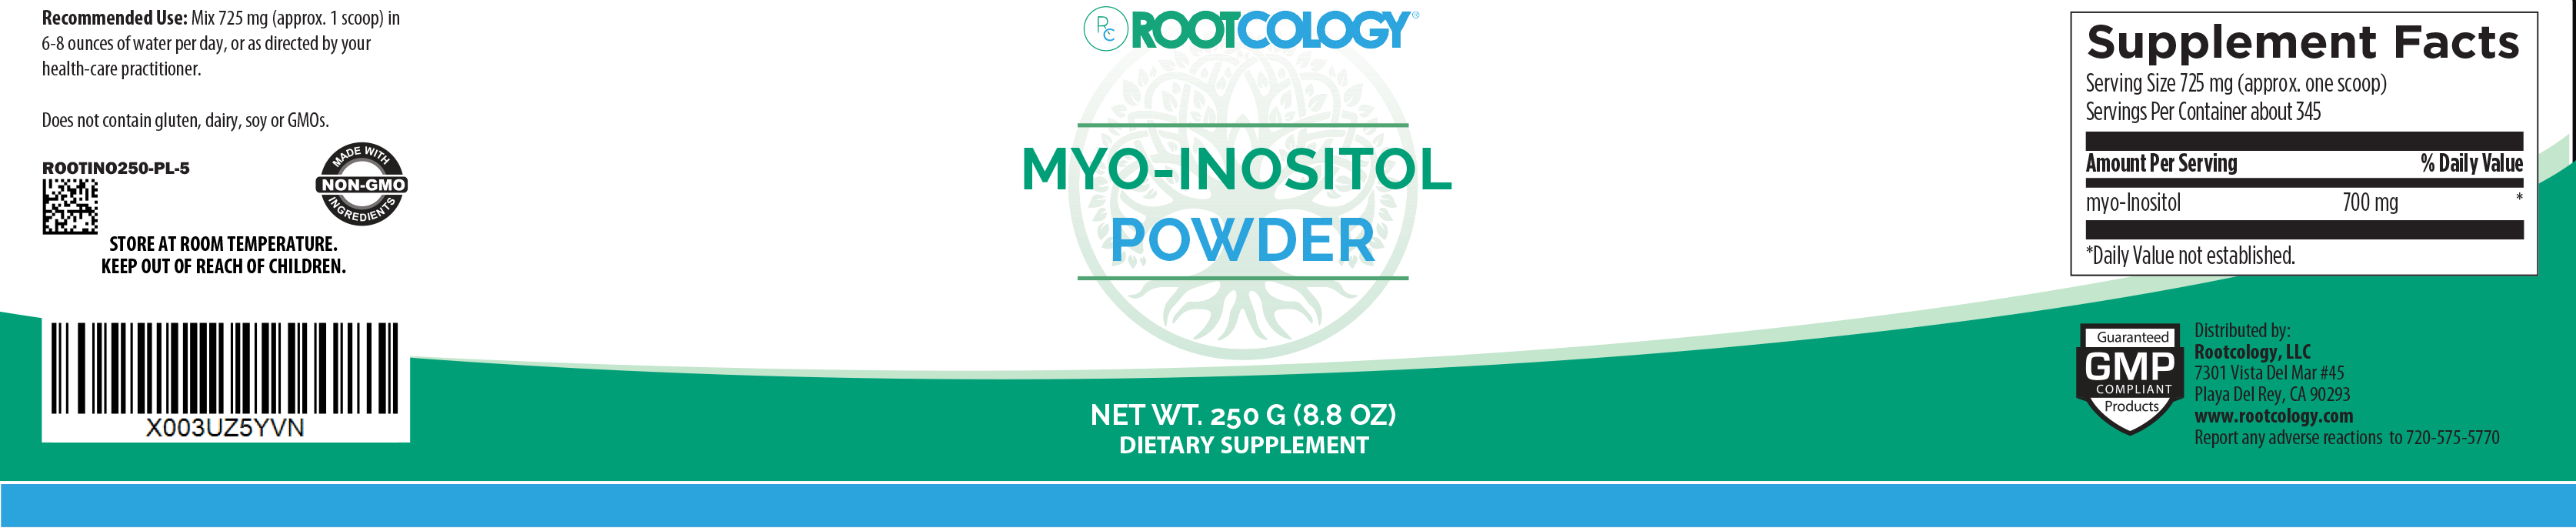 Rootcology Myo-Inositol Powder Supplement Label